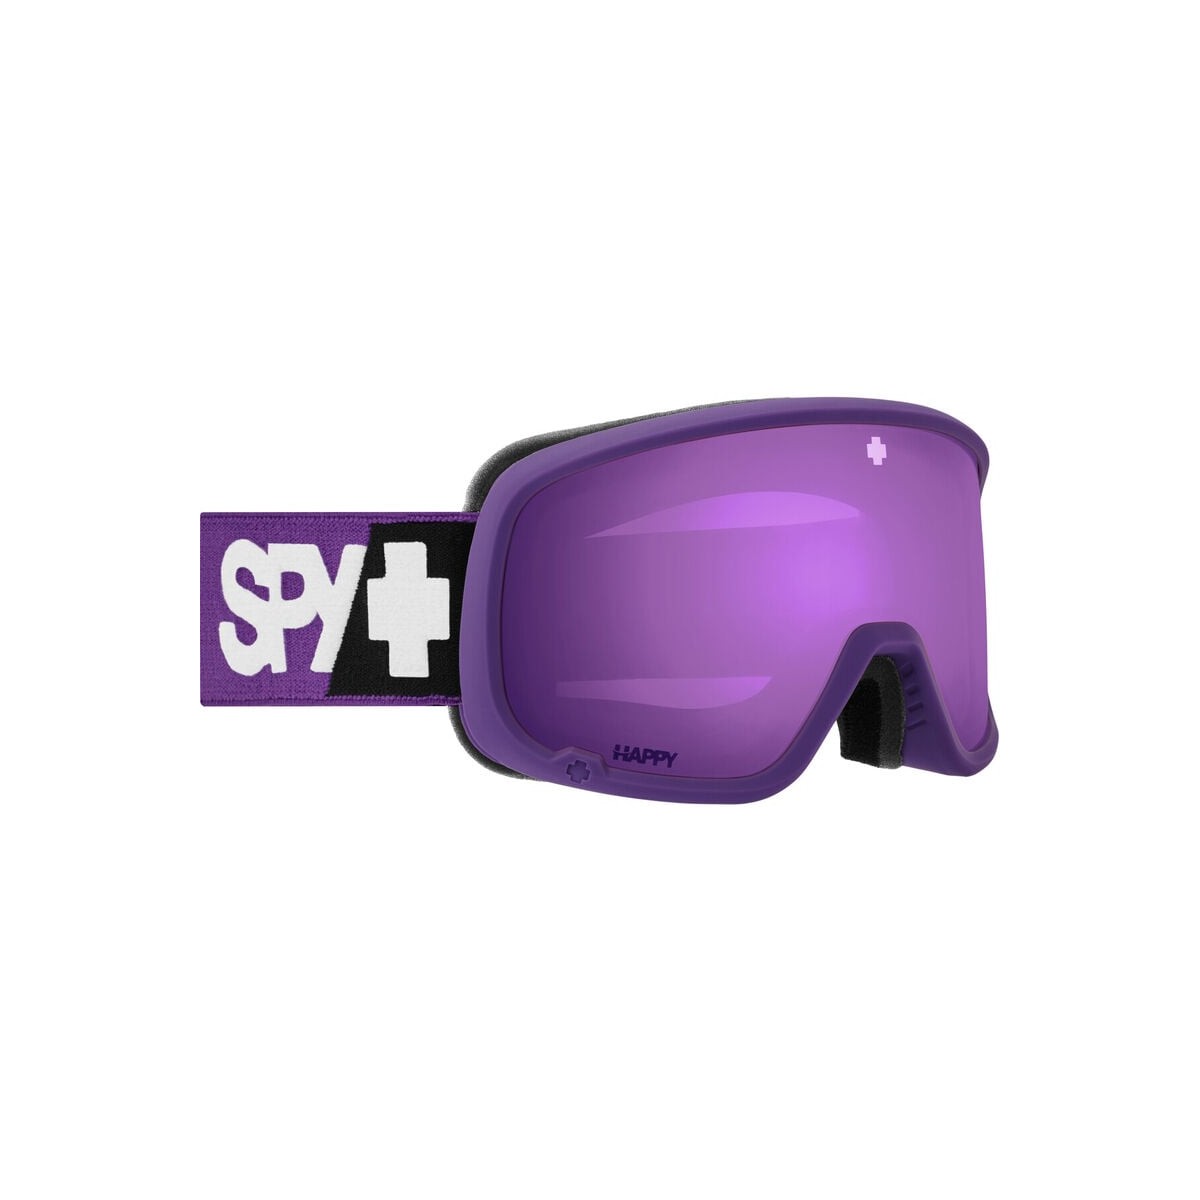 SPY MARSHALL 2.0 SNOW goggles - purple